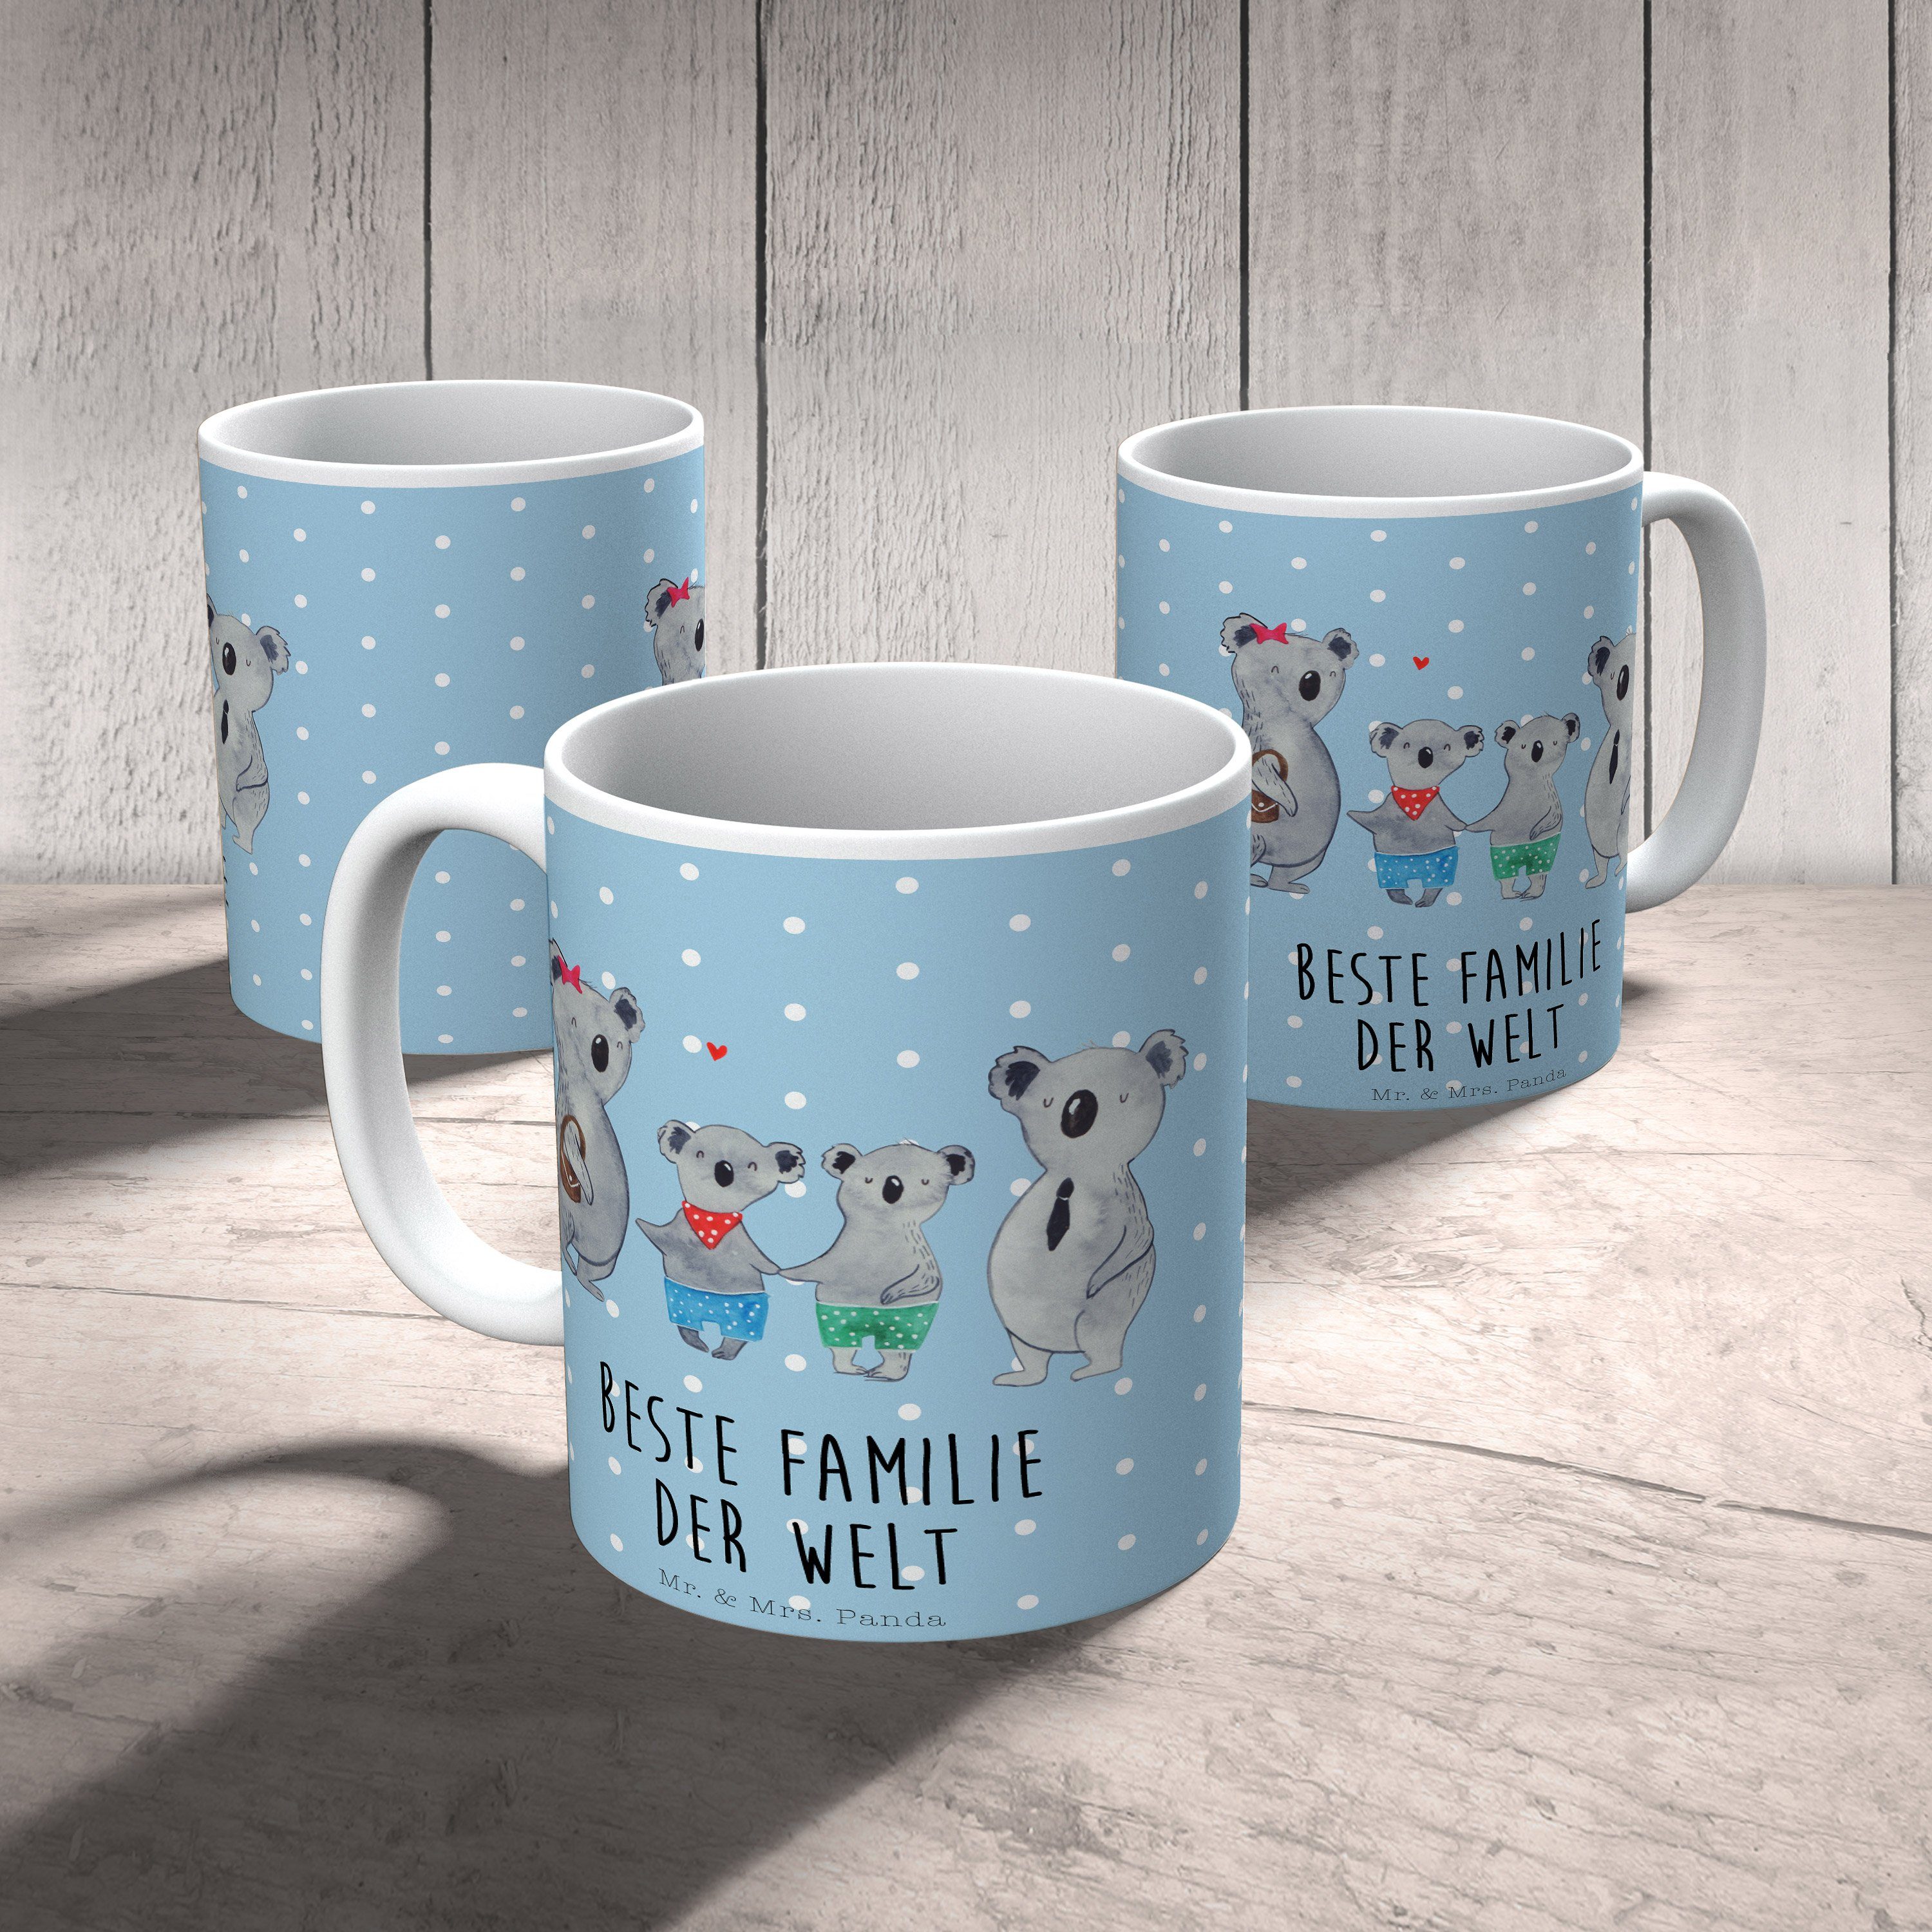 - Keramik Mrs. Panda Mr. & Koalabär, Pastell Tasse - Geschenk, Familie Koala zwei Kaffeetasse, Blau